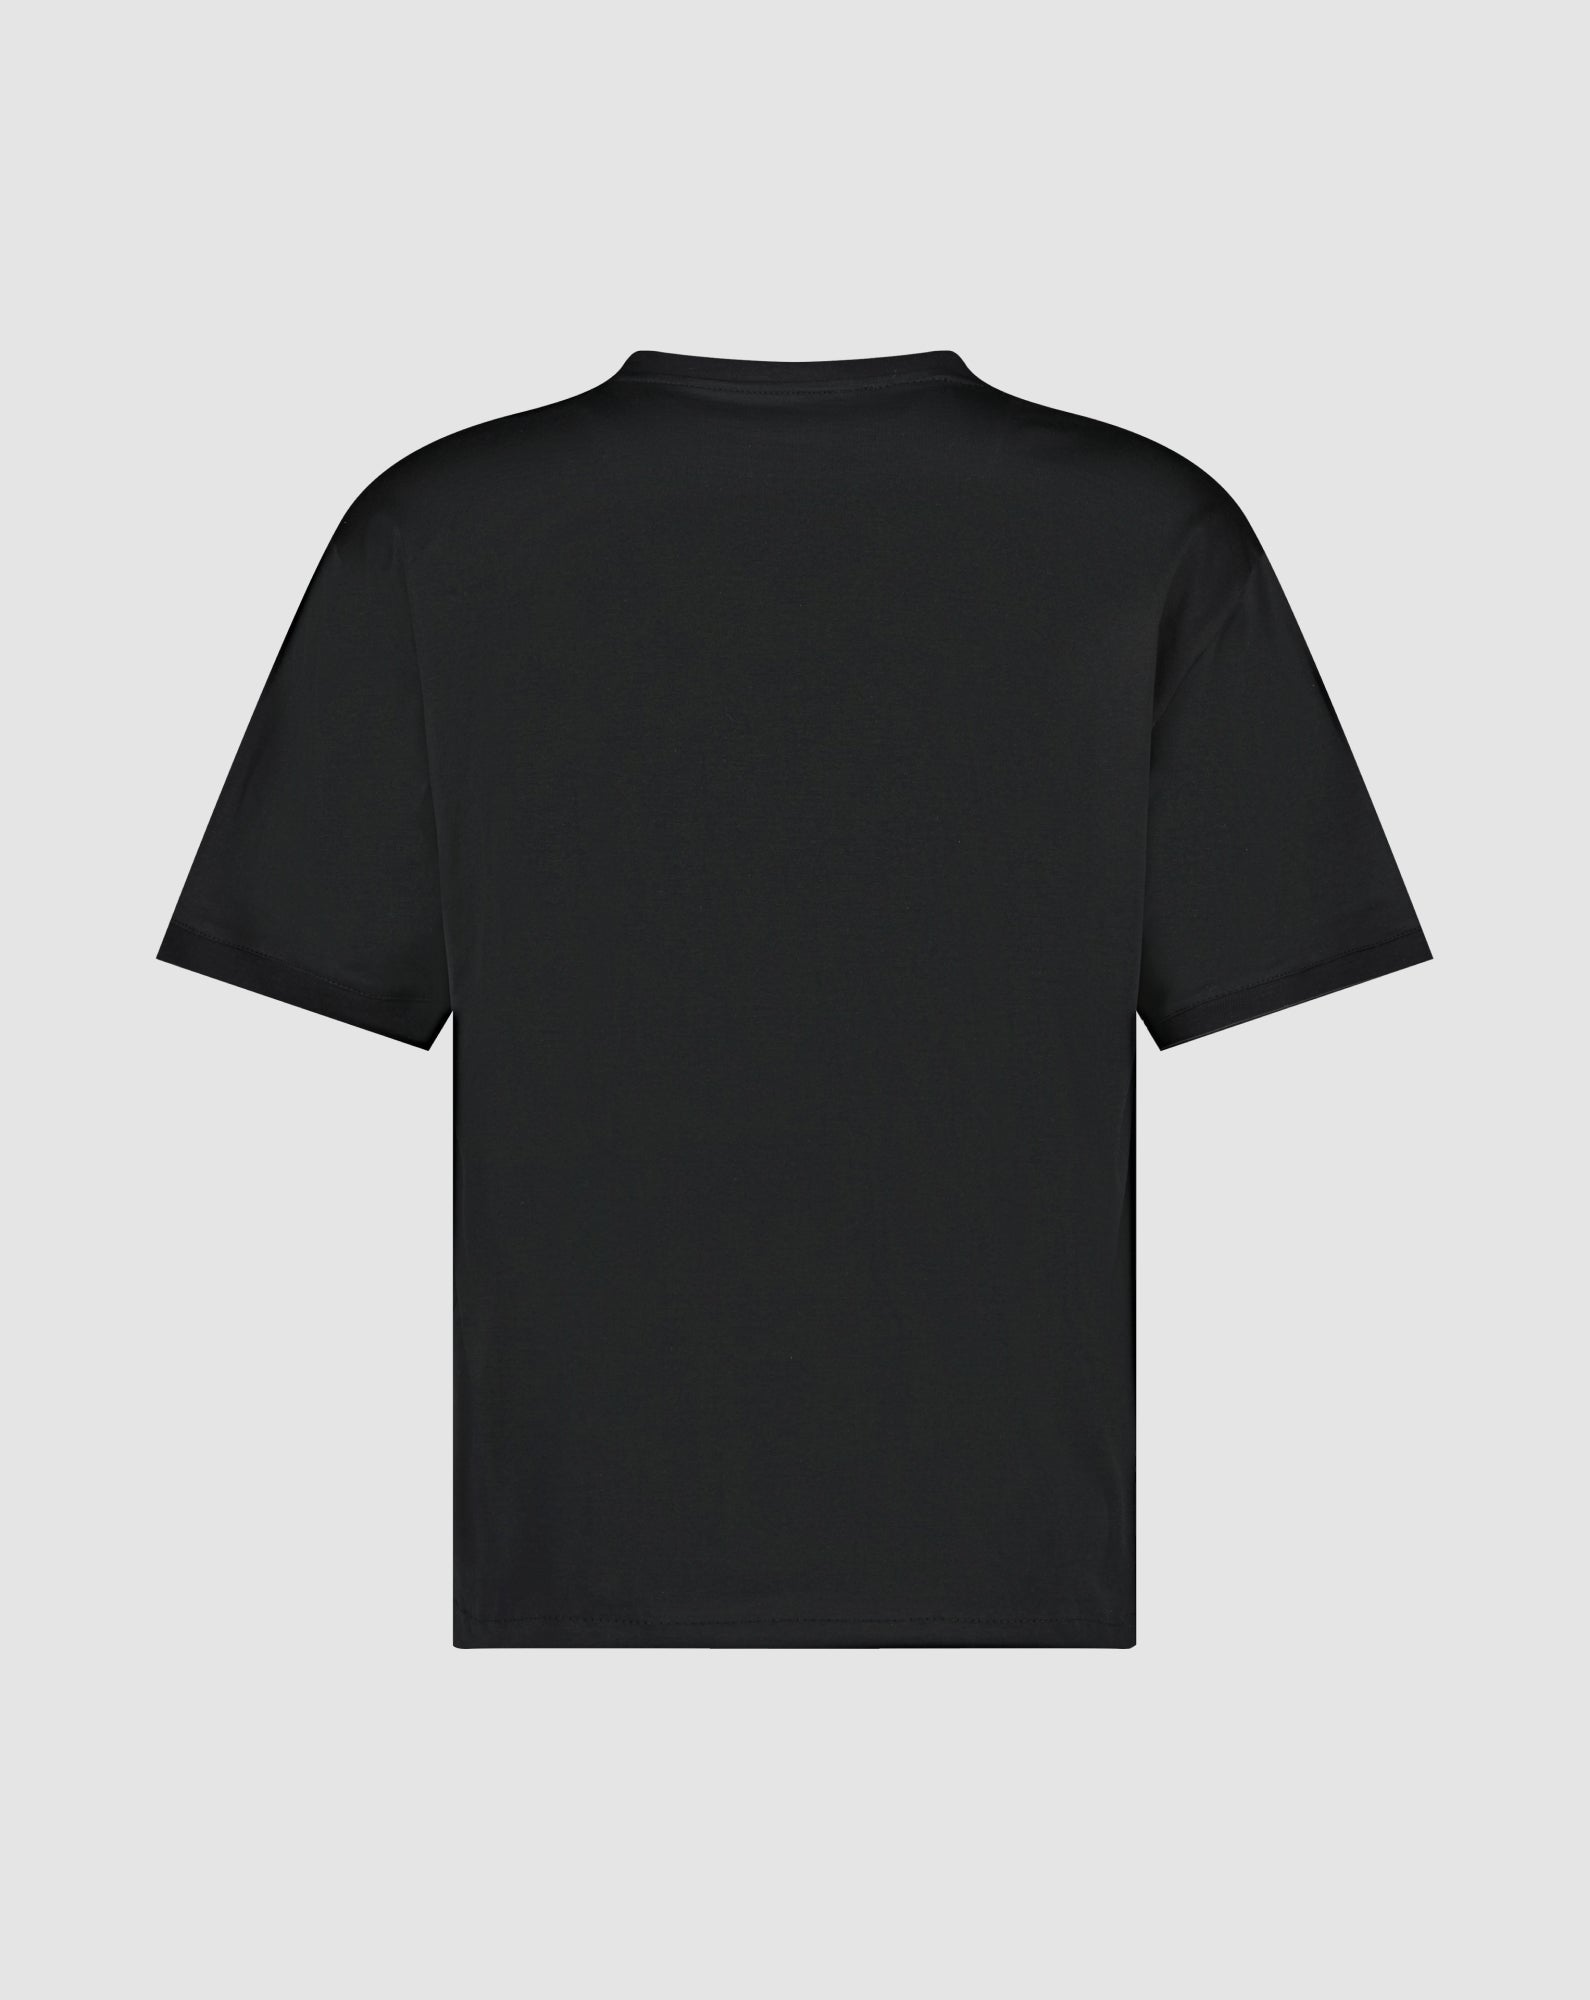 T-shirt Intégral Noir - Homme